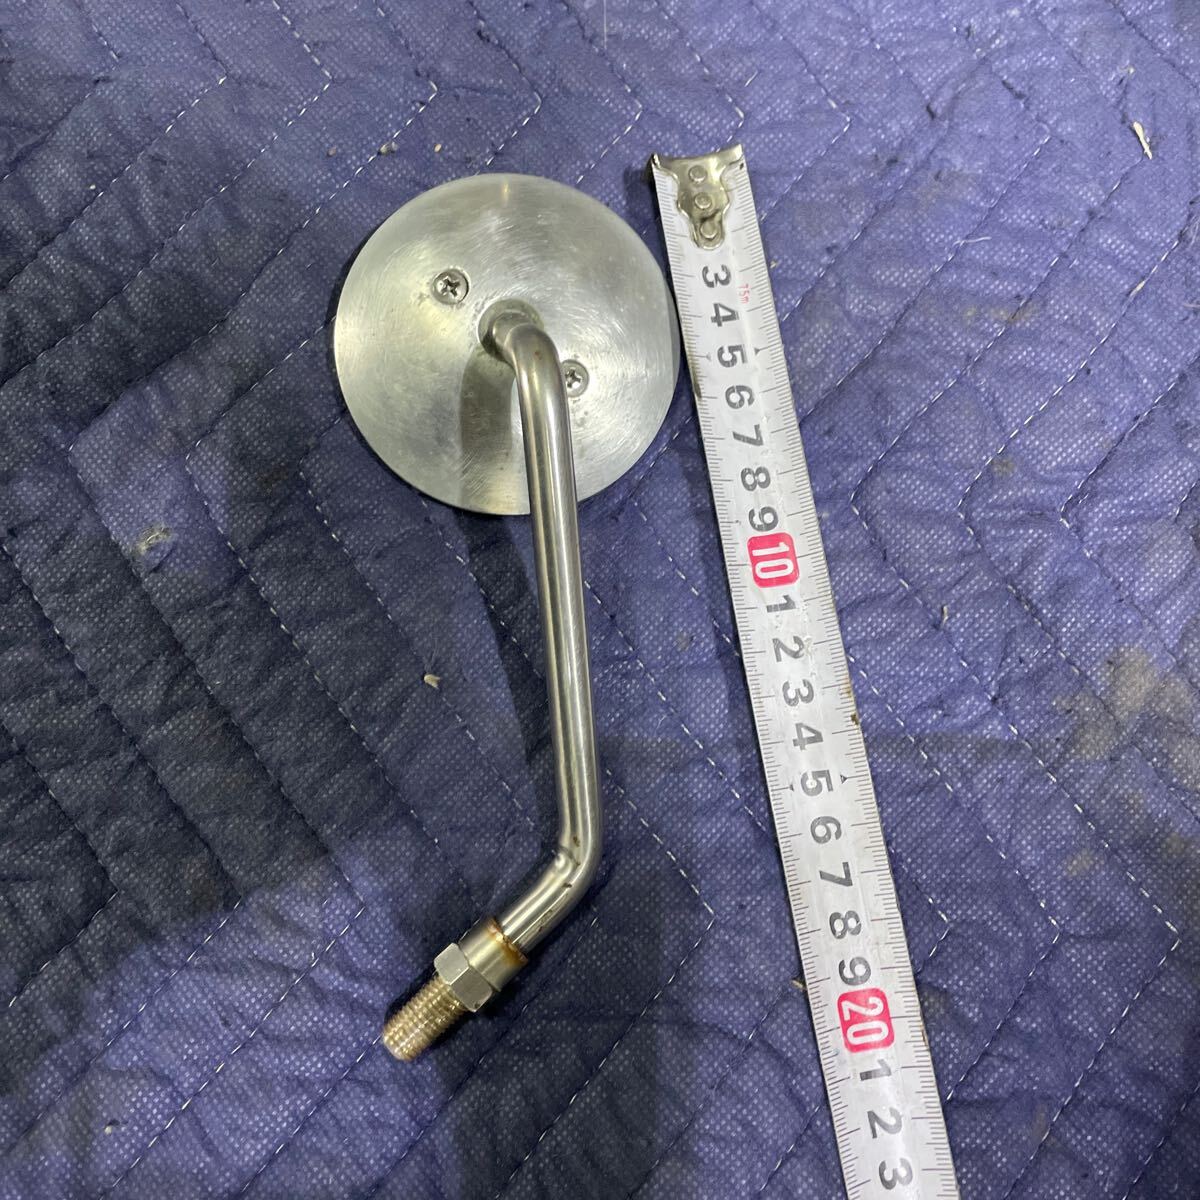 [157] after market mirror aluminium / stainless steel 10. regular screw right for poshposhu